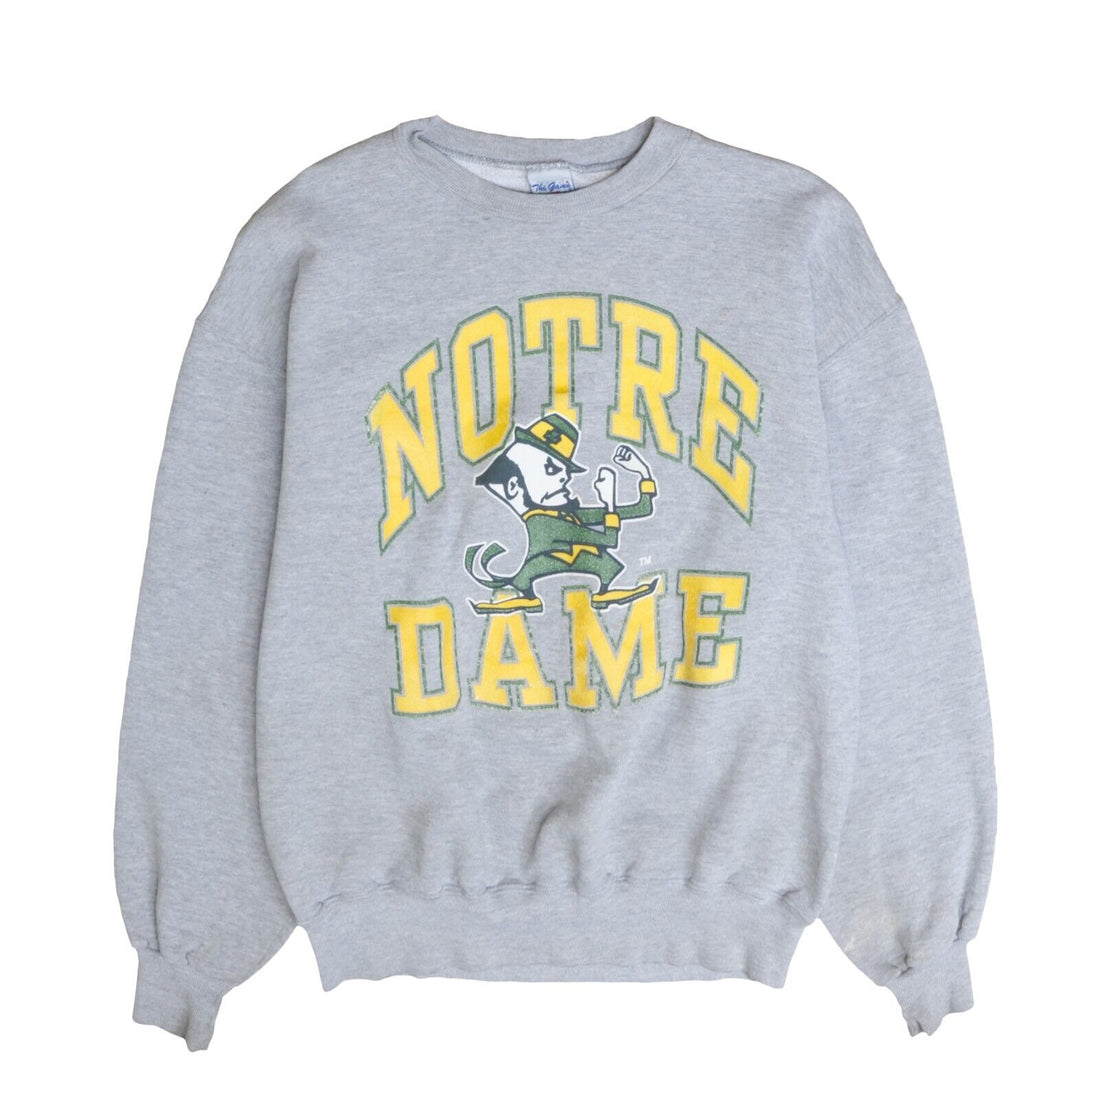 Vintage Notre Dame Fighting Irish Sweatshirt Crewneck Size Large Gray NCAA